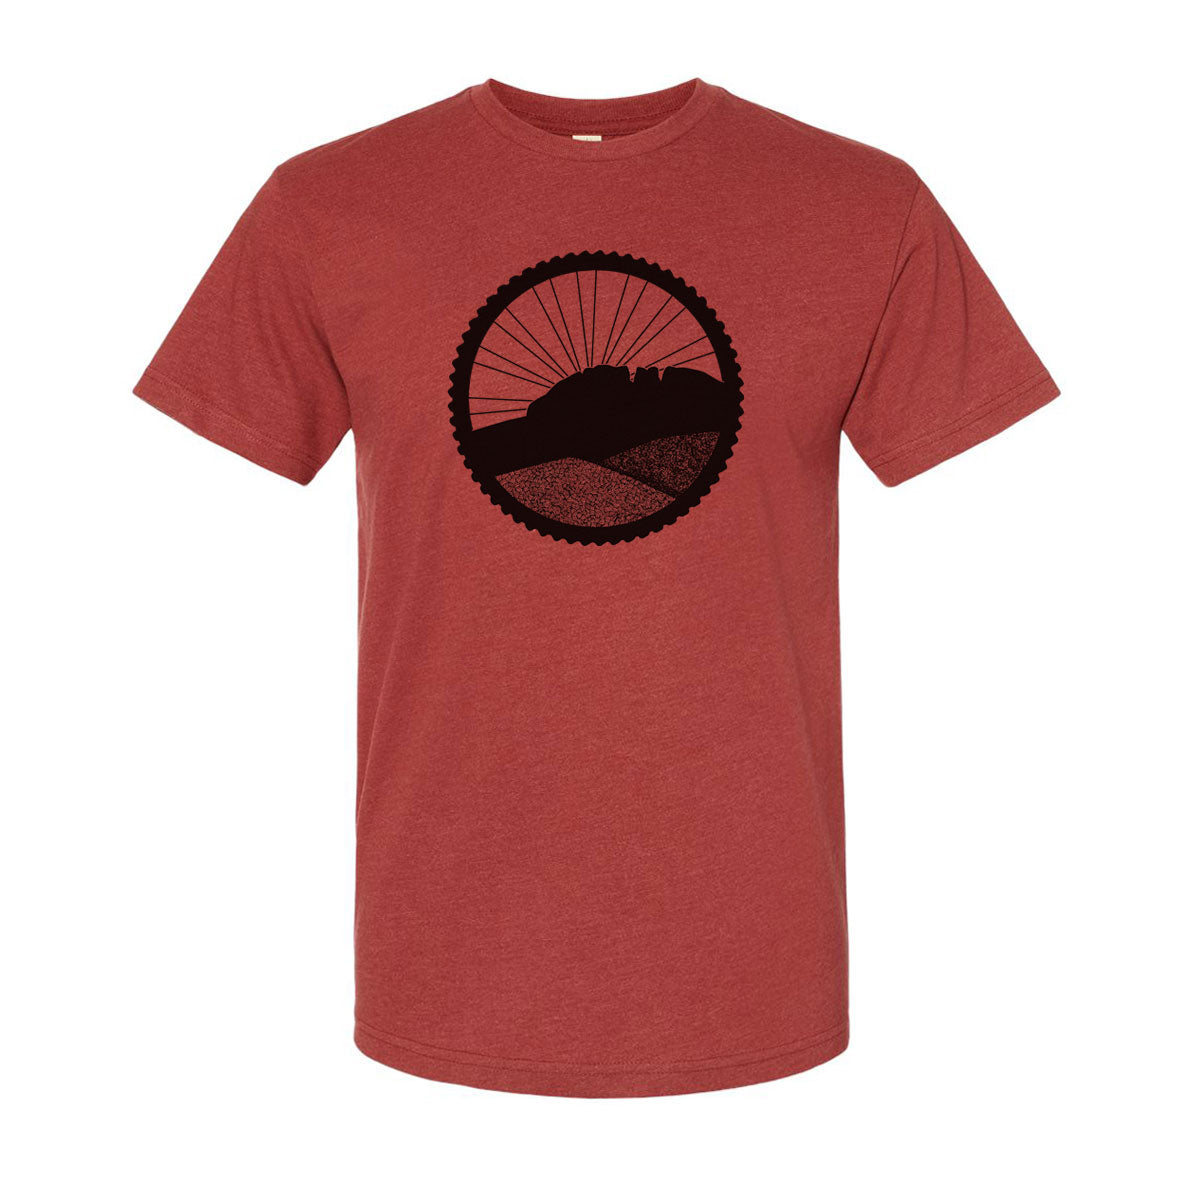 Red mountain park design t shirt 